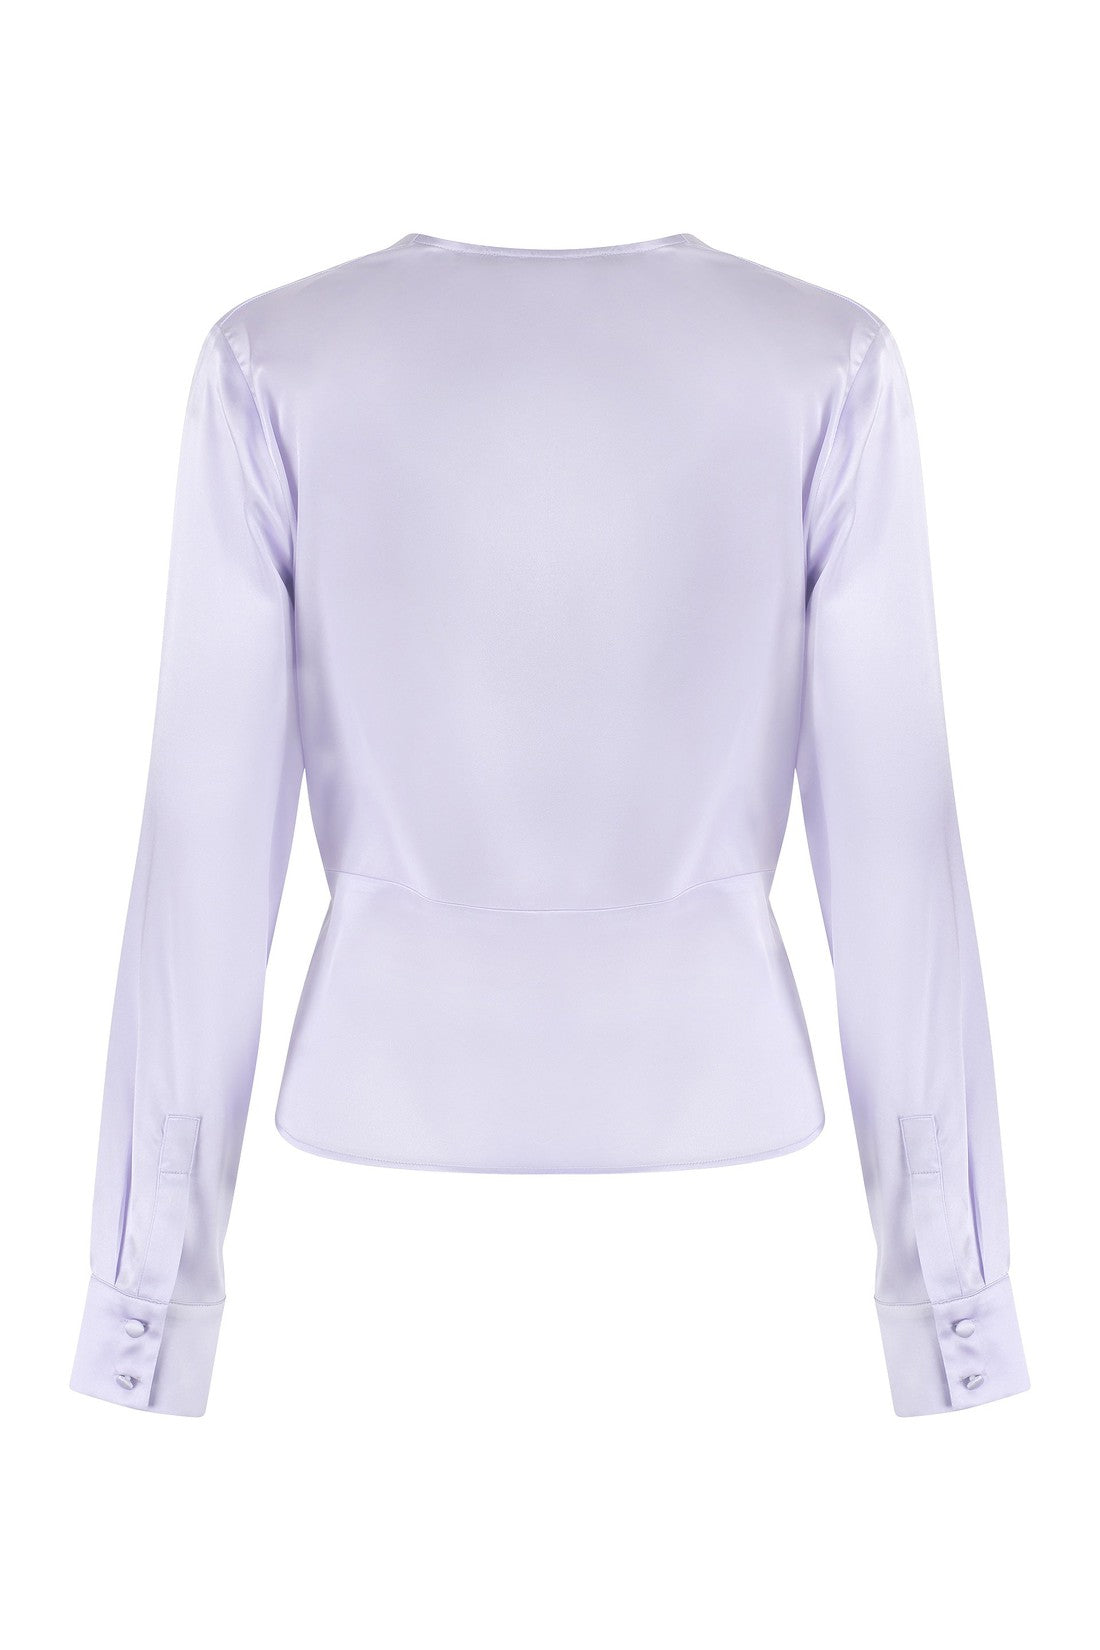 Pinko-OUTLET-SALE-Baradero silk blouse-ARCHIVIST